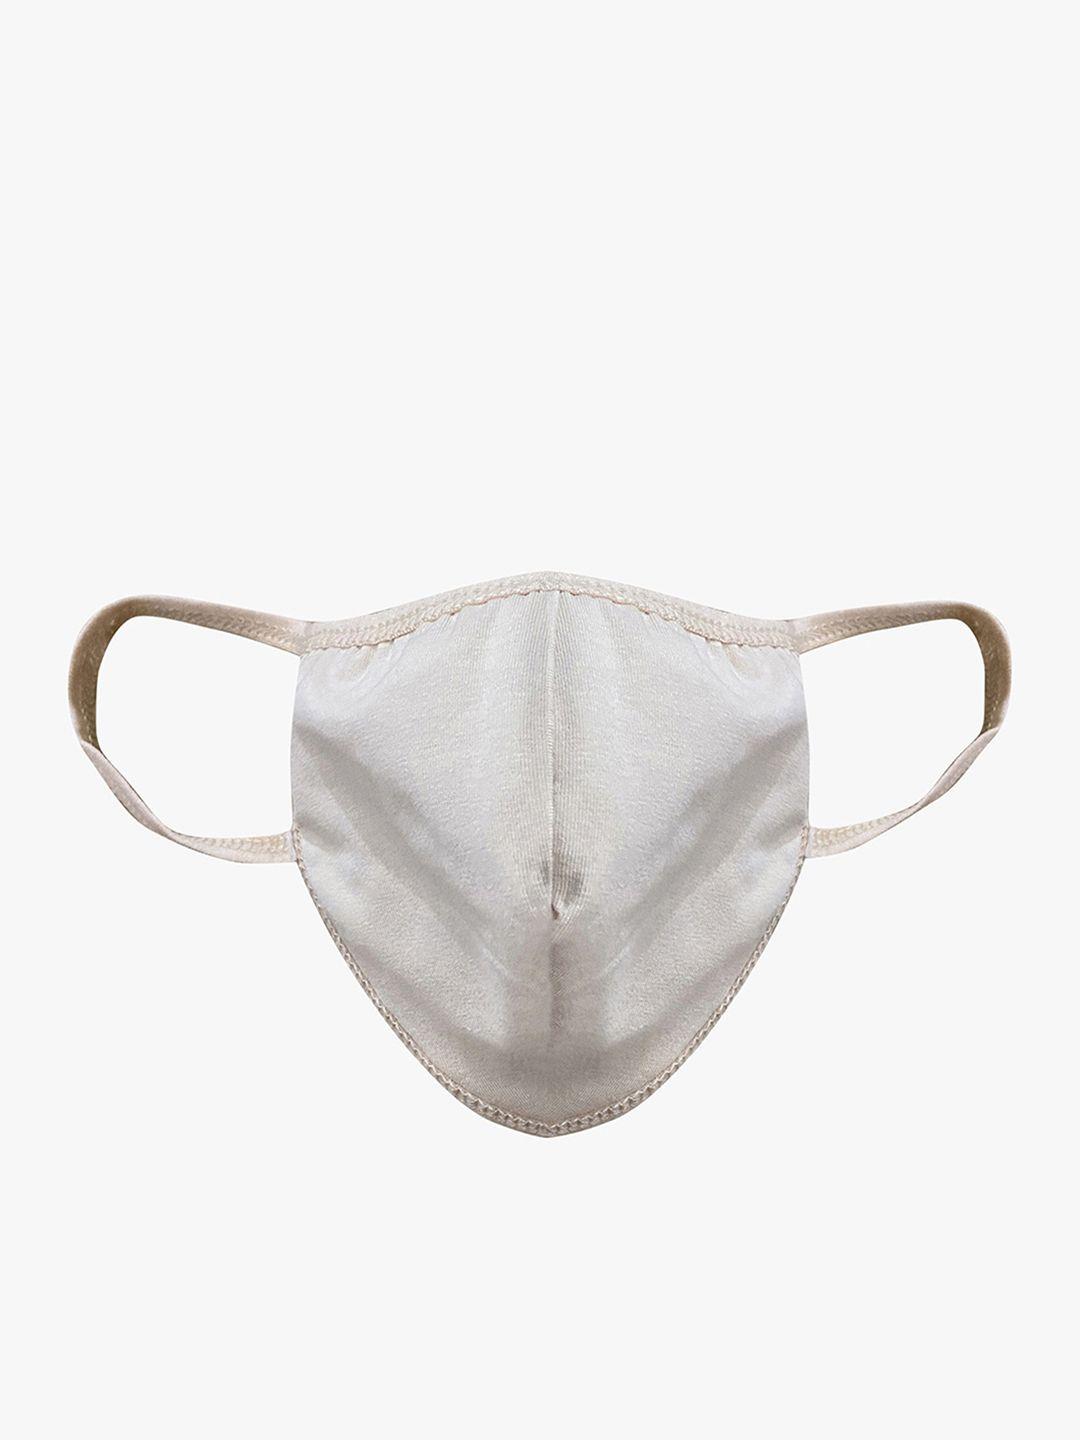 clovia unisex single beige 3-ply reusable fabric outdoor mask